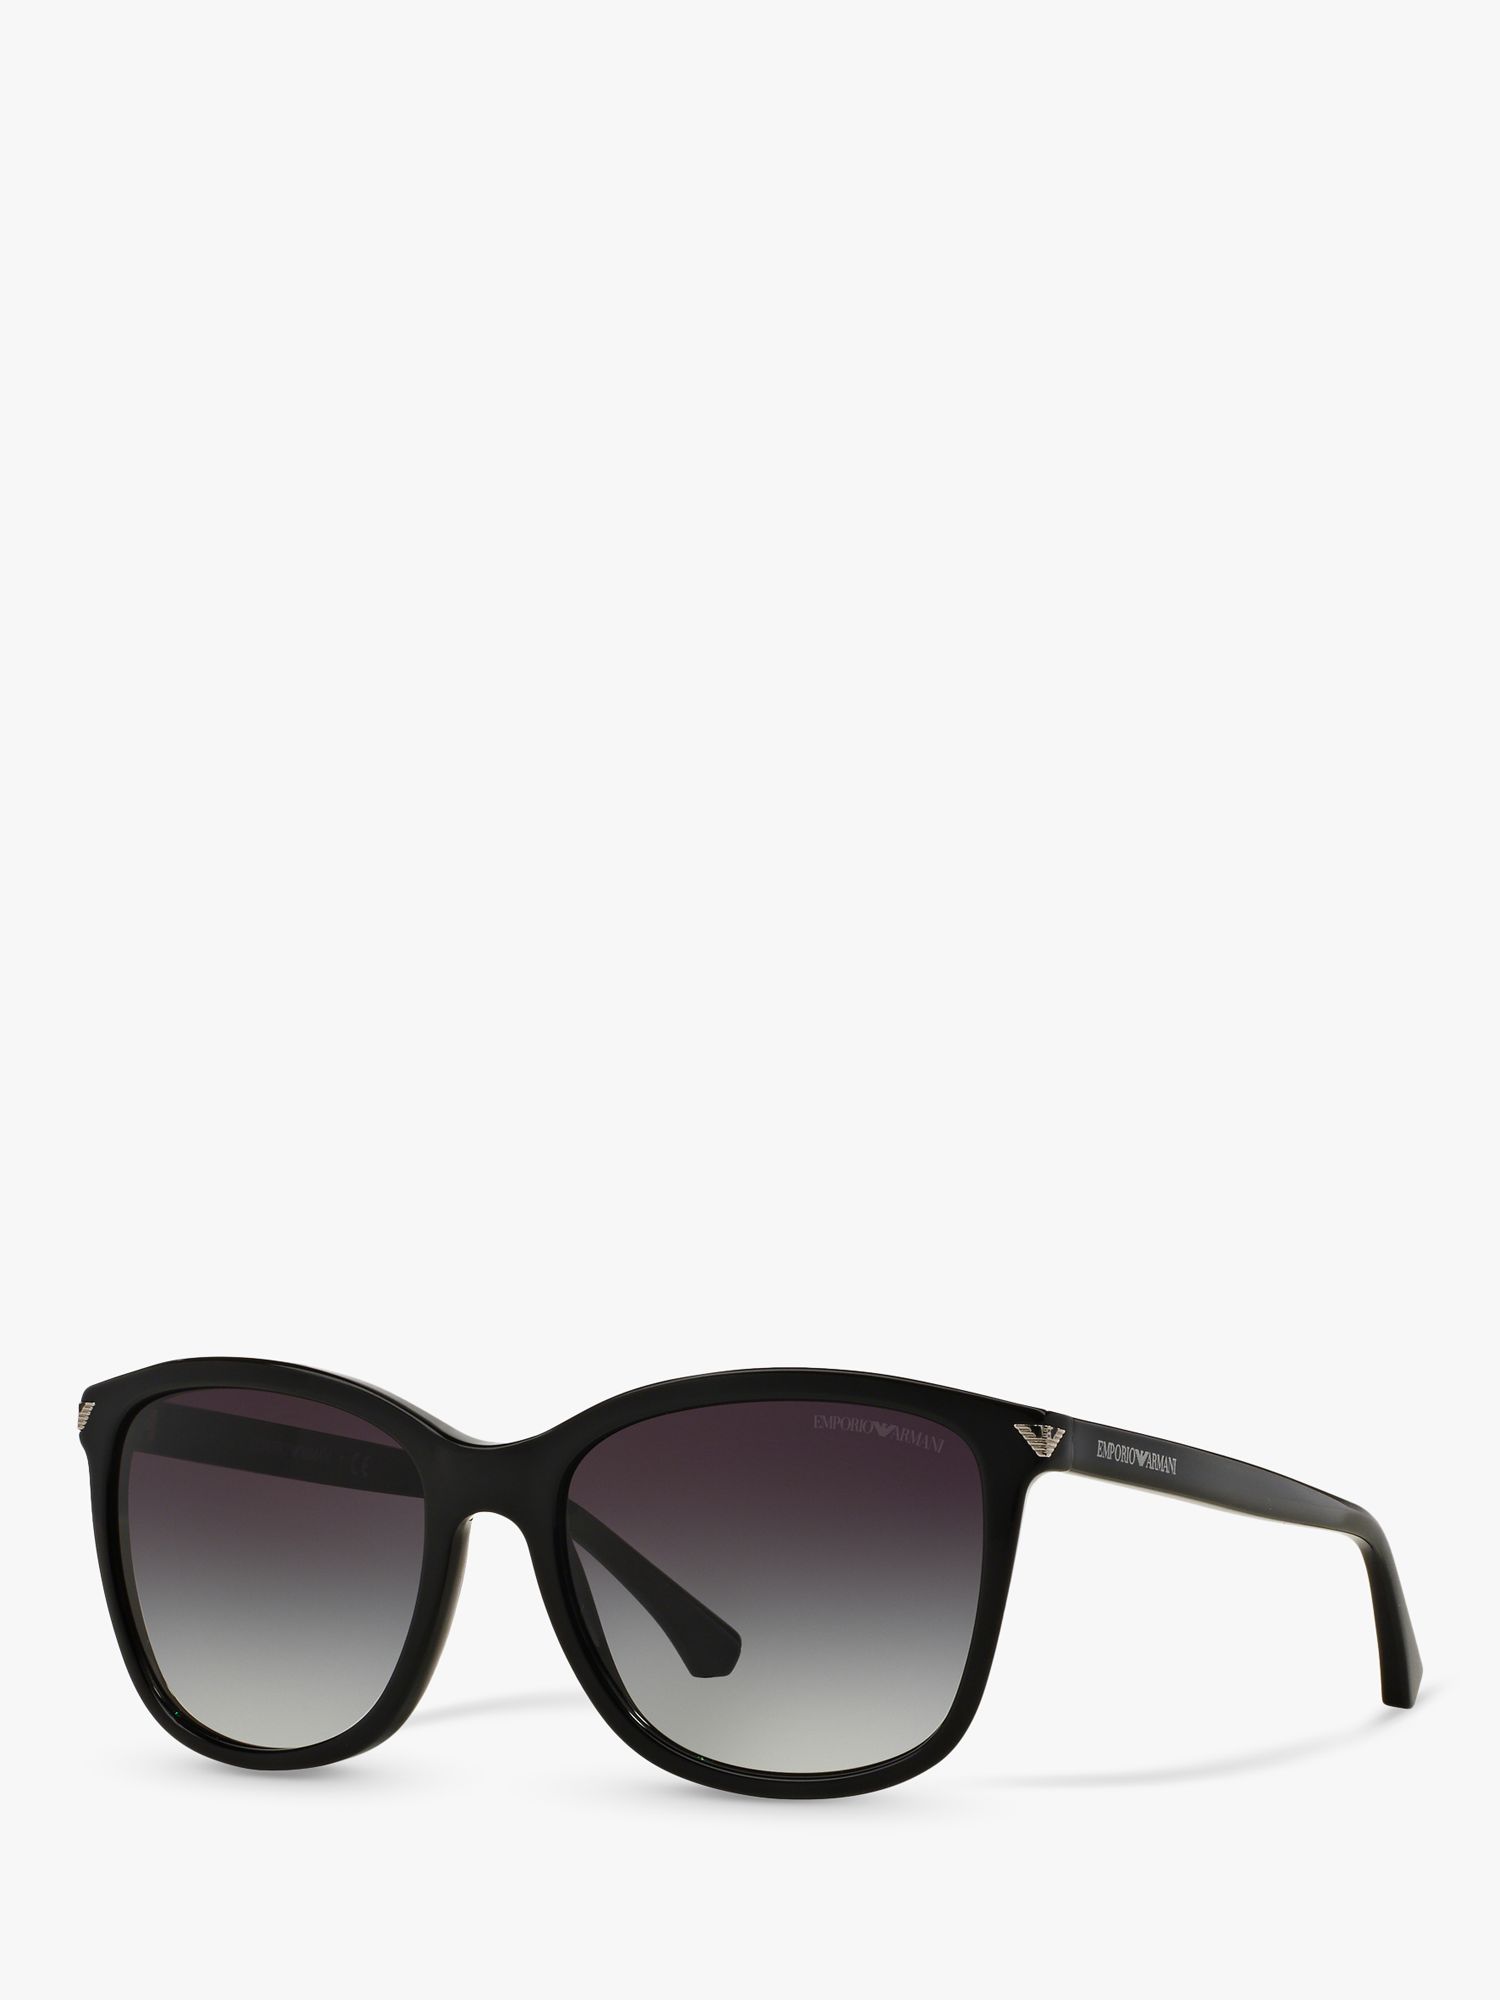 Emporio Armani EA4060 Women's Square Sunglasses, Black/Grey Gradient at  John Lewis & Partners